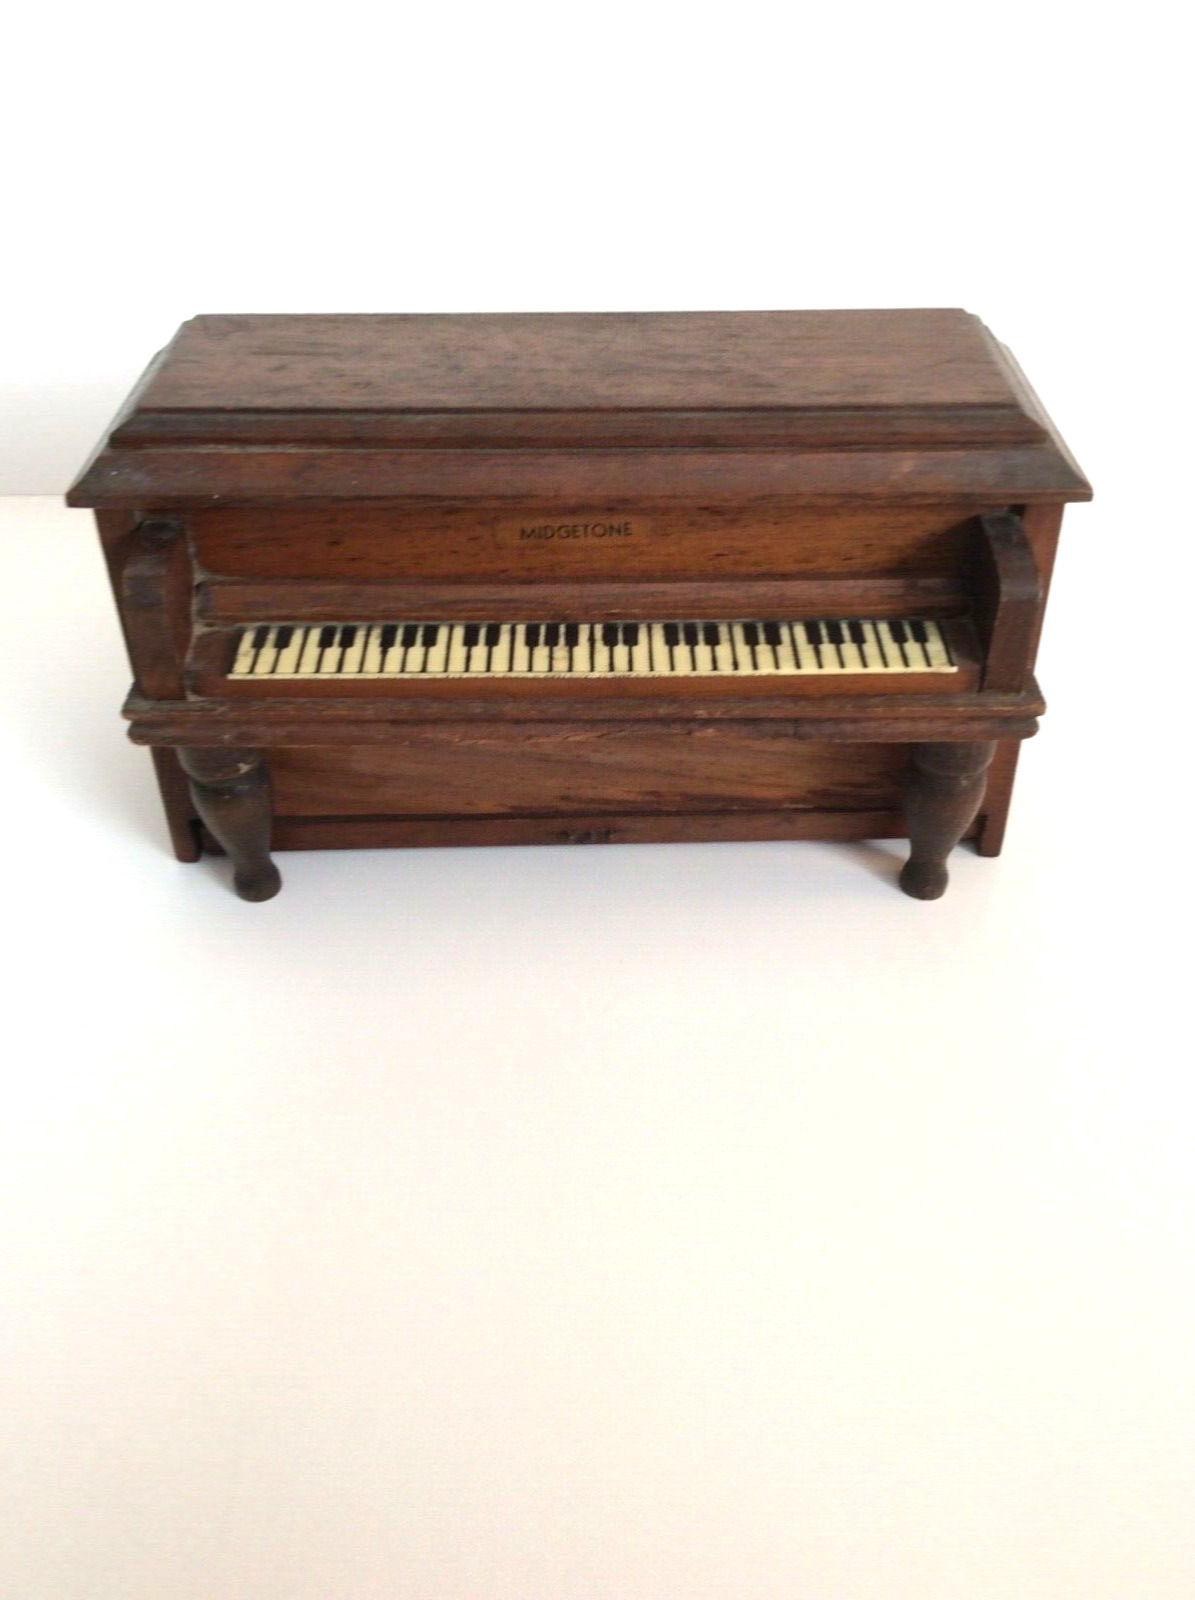 Vintage Miniature Upright Piano Wooden Music Box